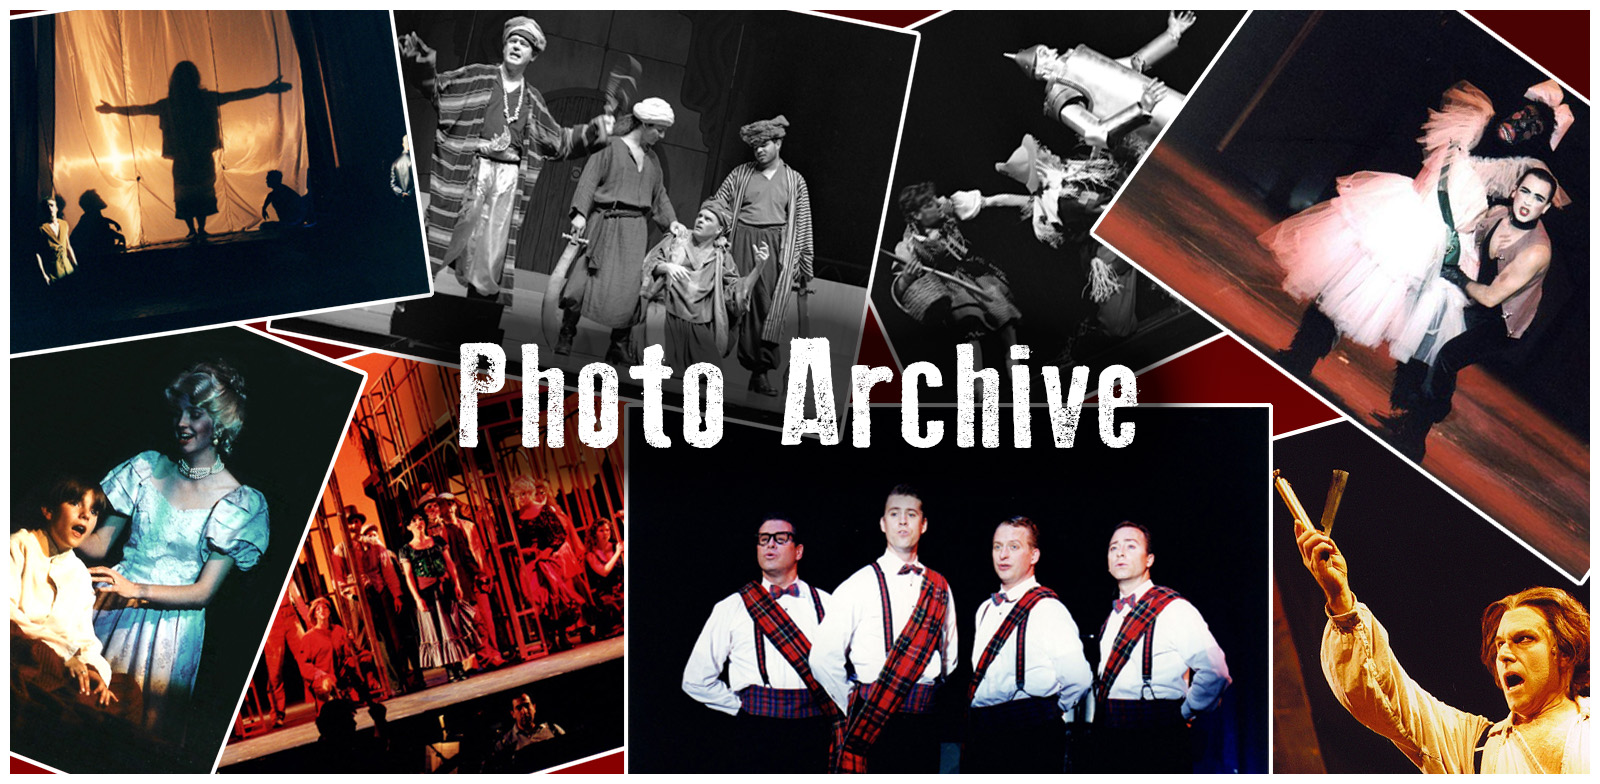 Visit our Photo Archive